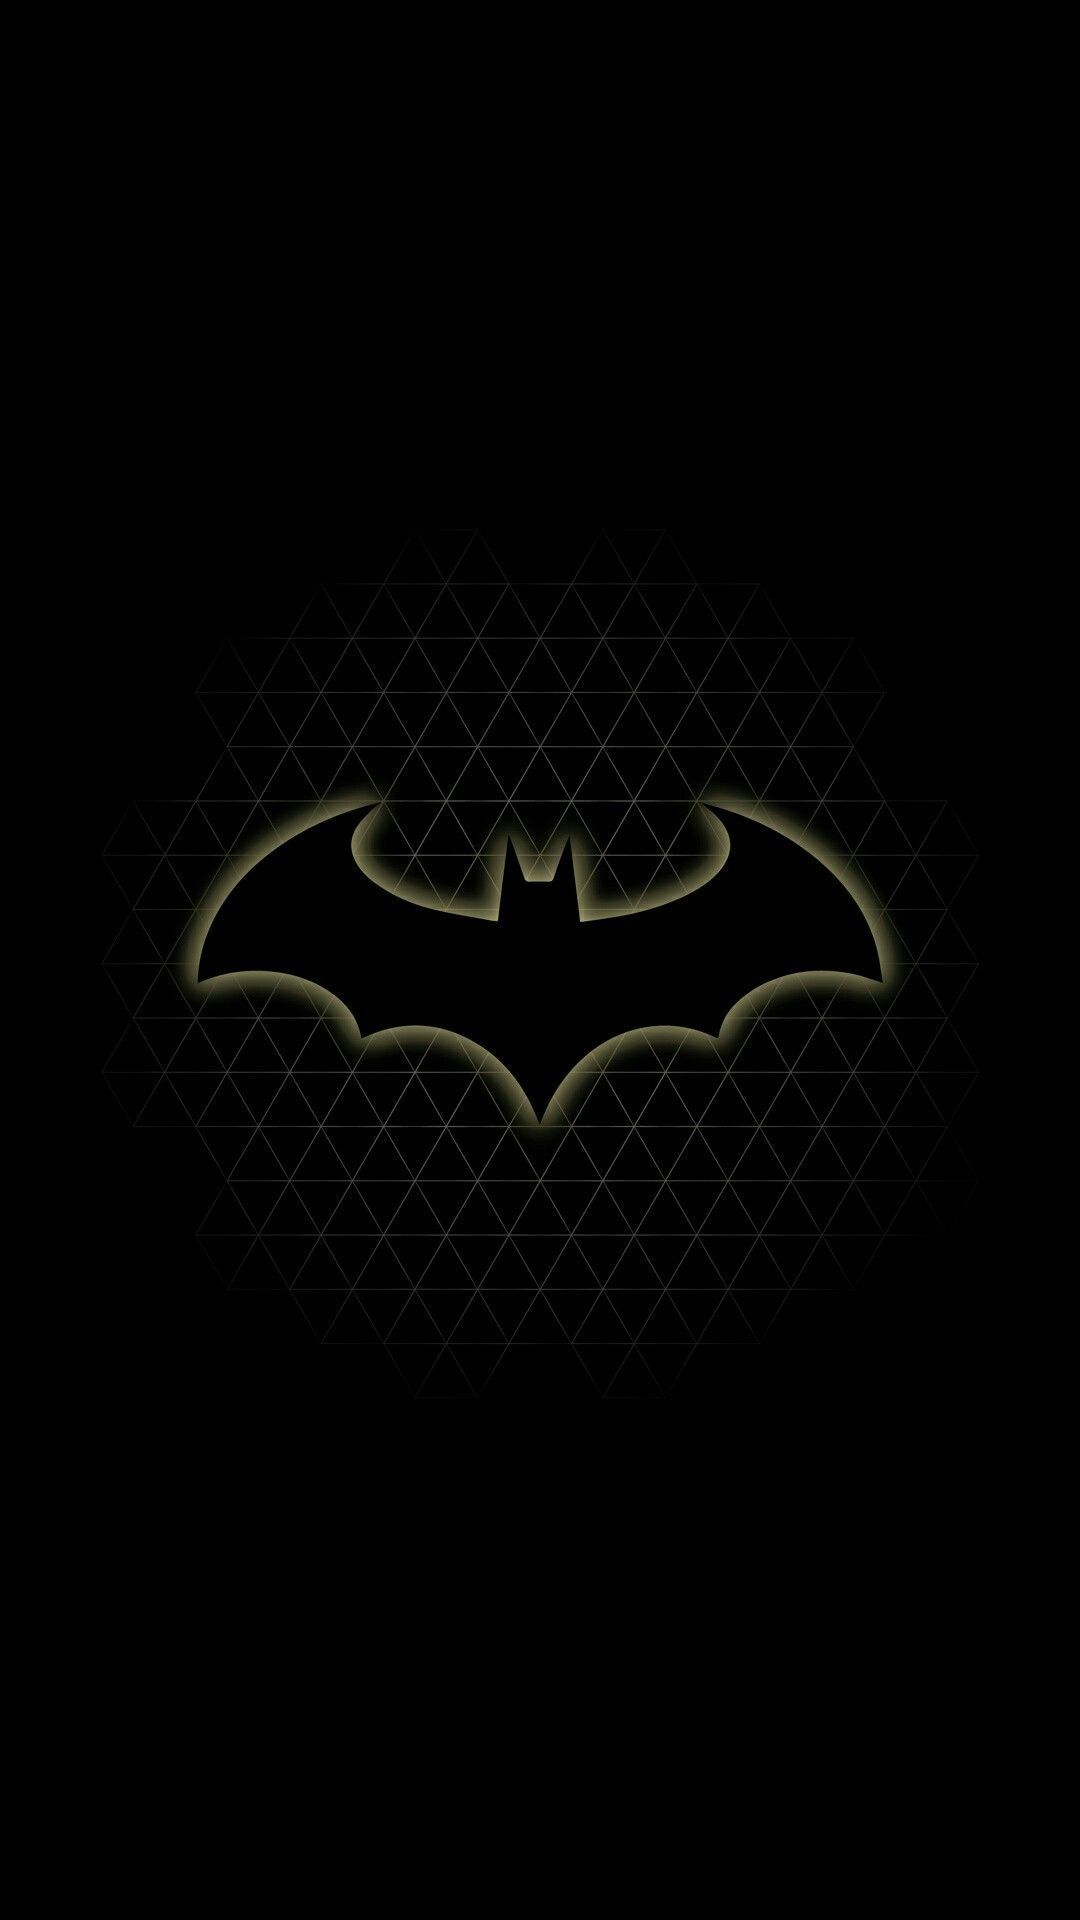 Batman Wallpaper iPhone - ووردز